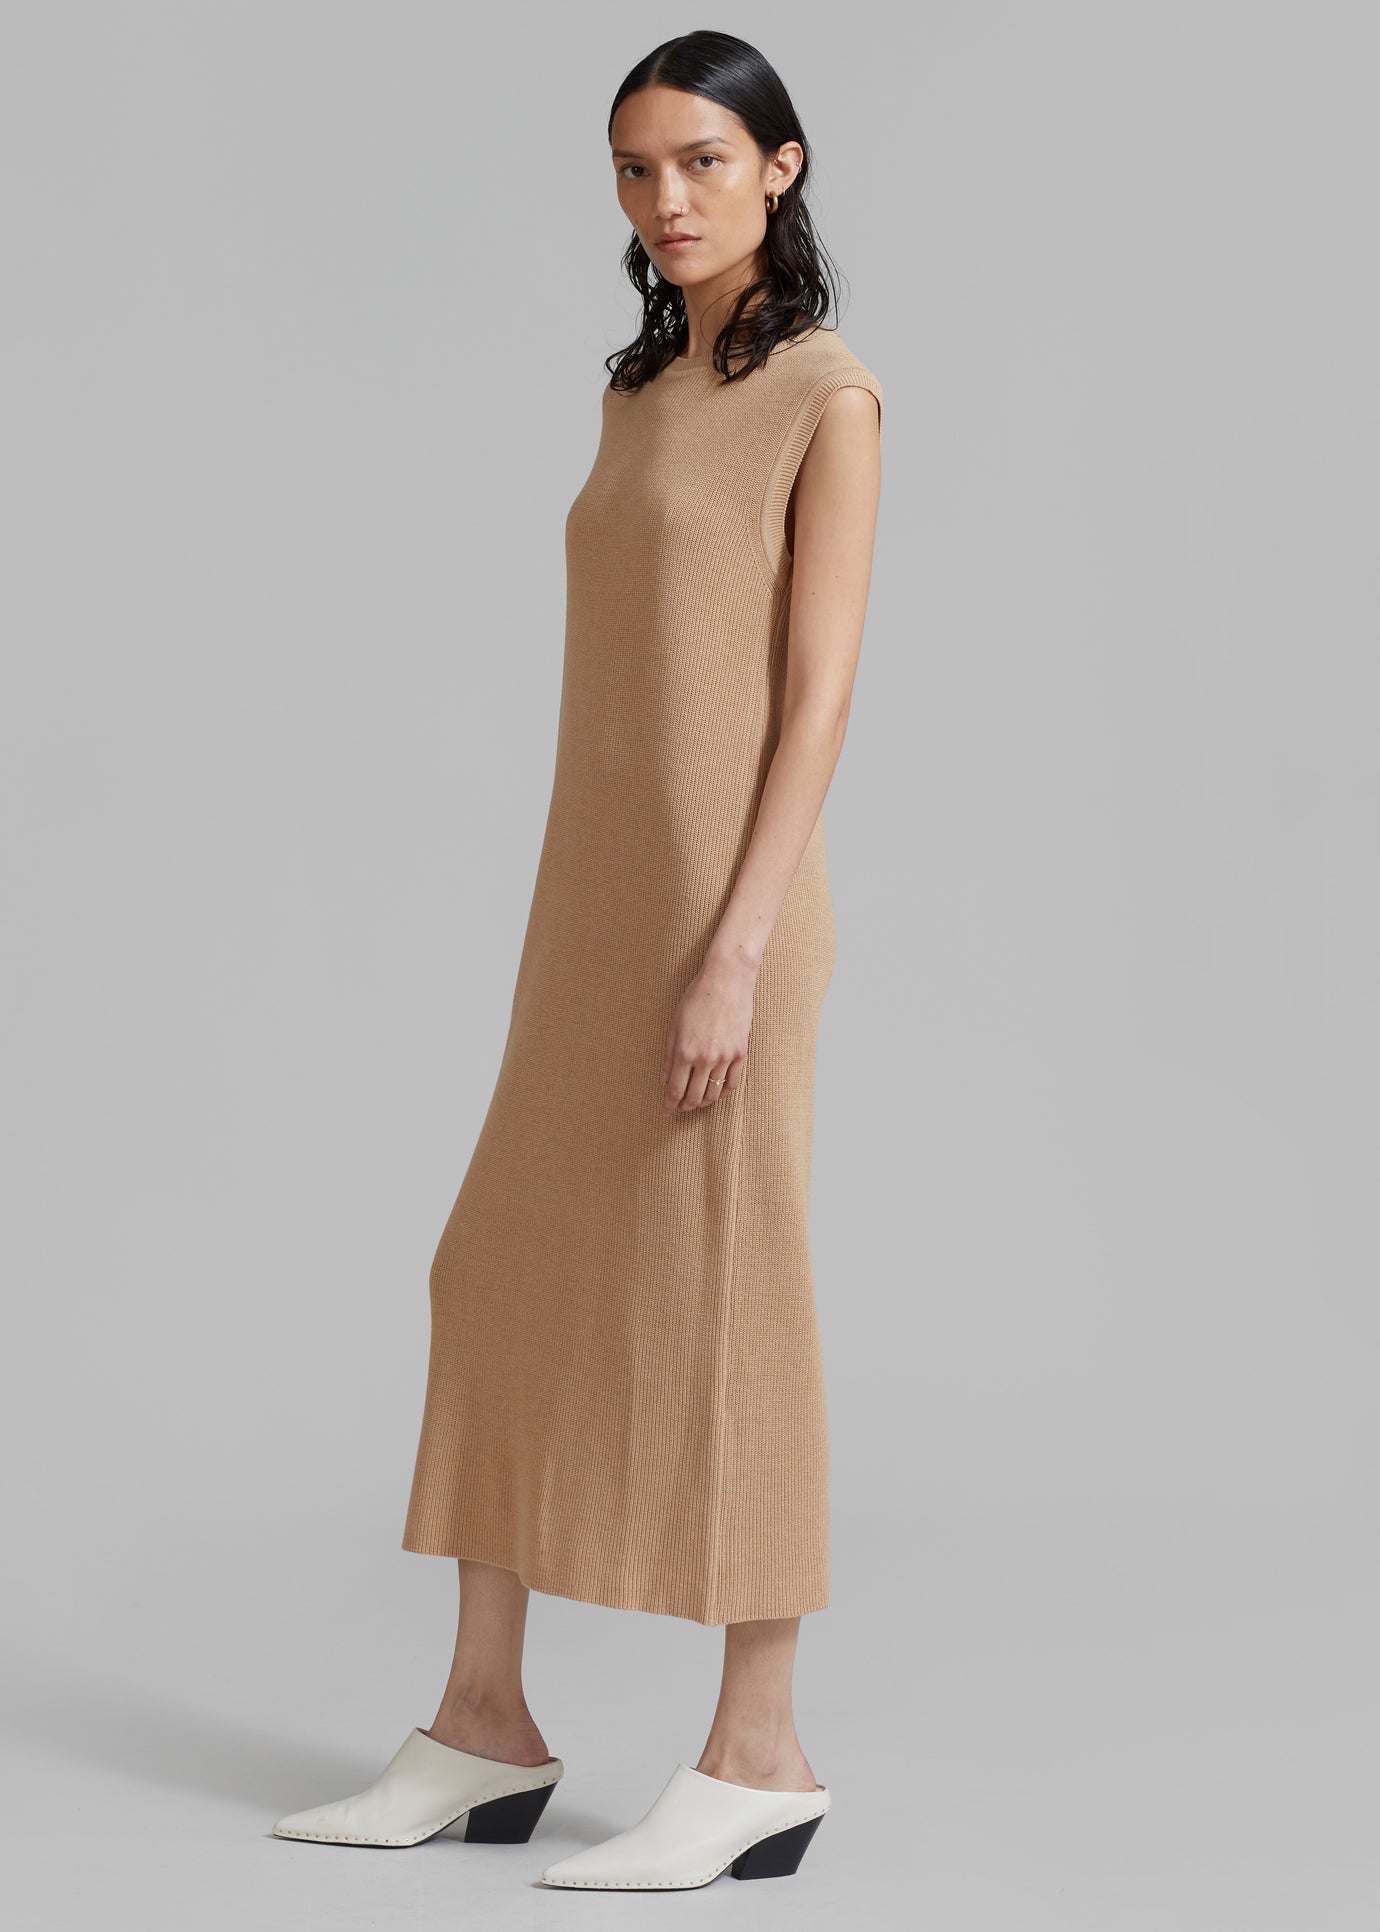 Rosie Knit Dress - Camel